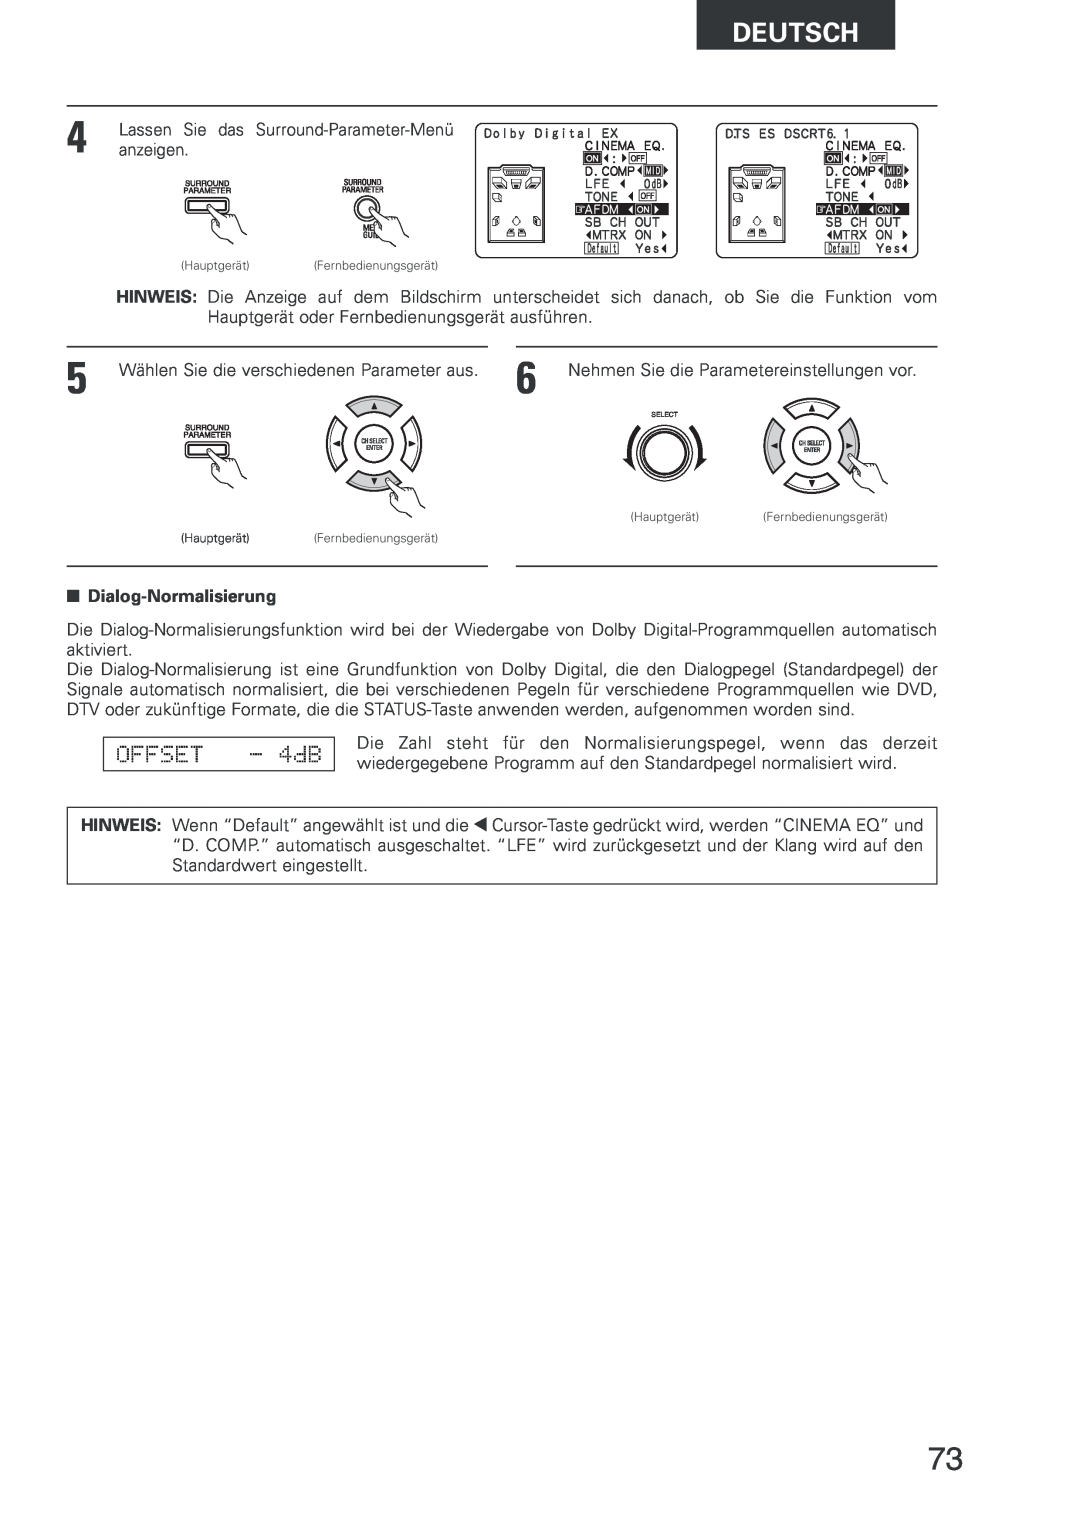 Denon AVR-2803 manual Dialog-Normalisierung, Deutsch, OFFSET - 4dB 